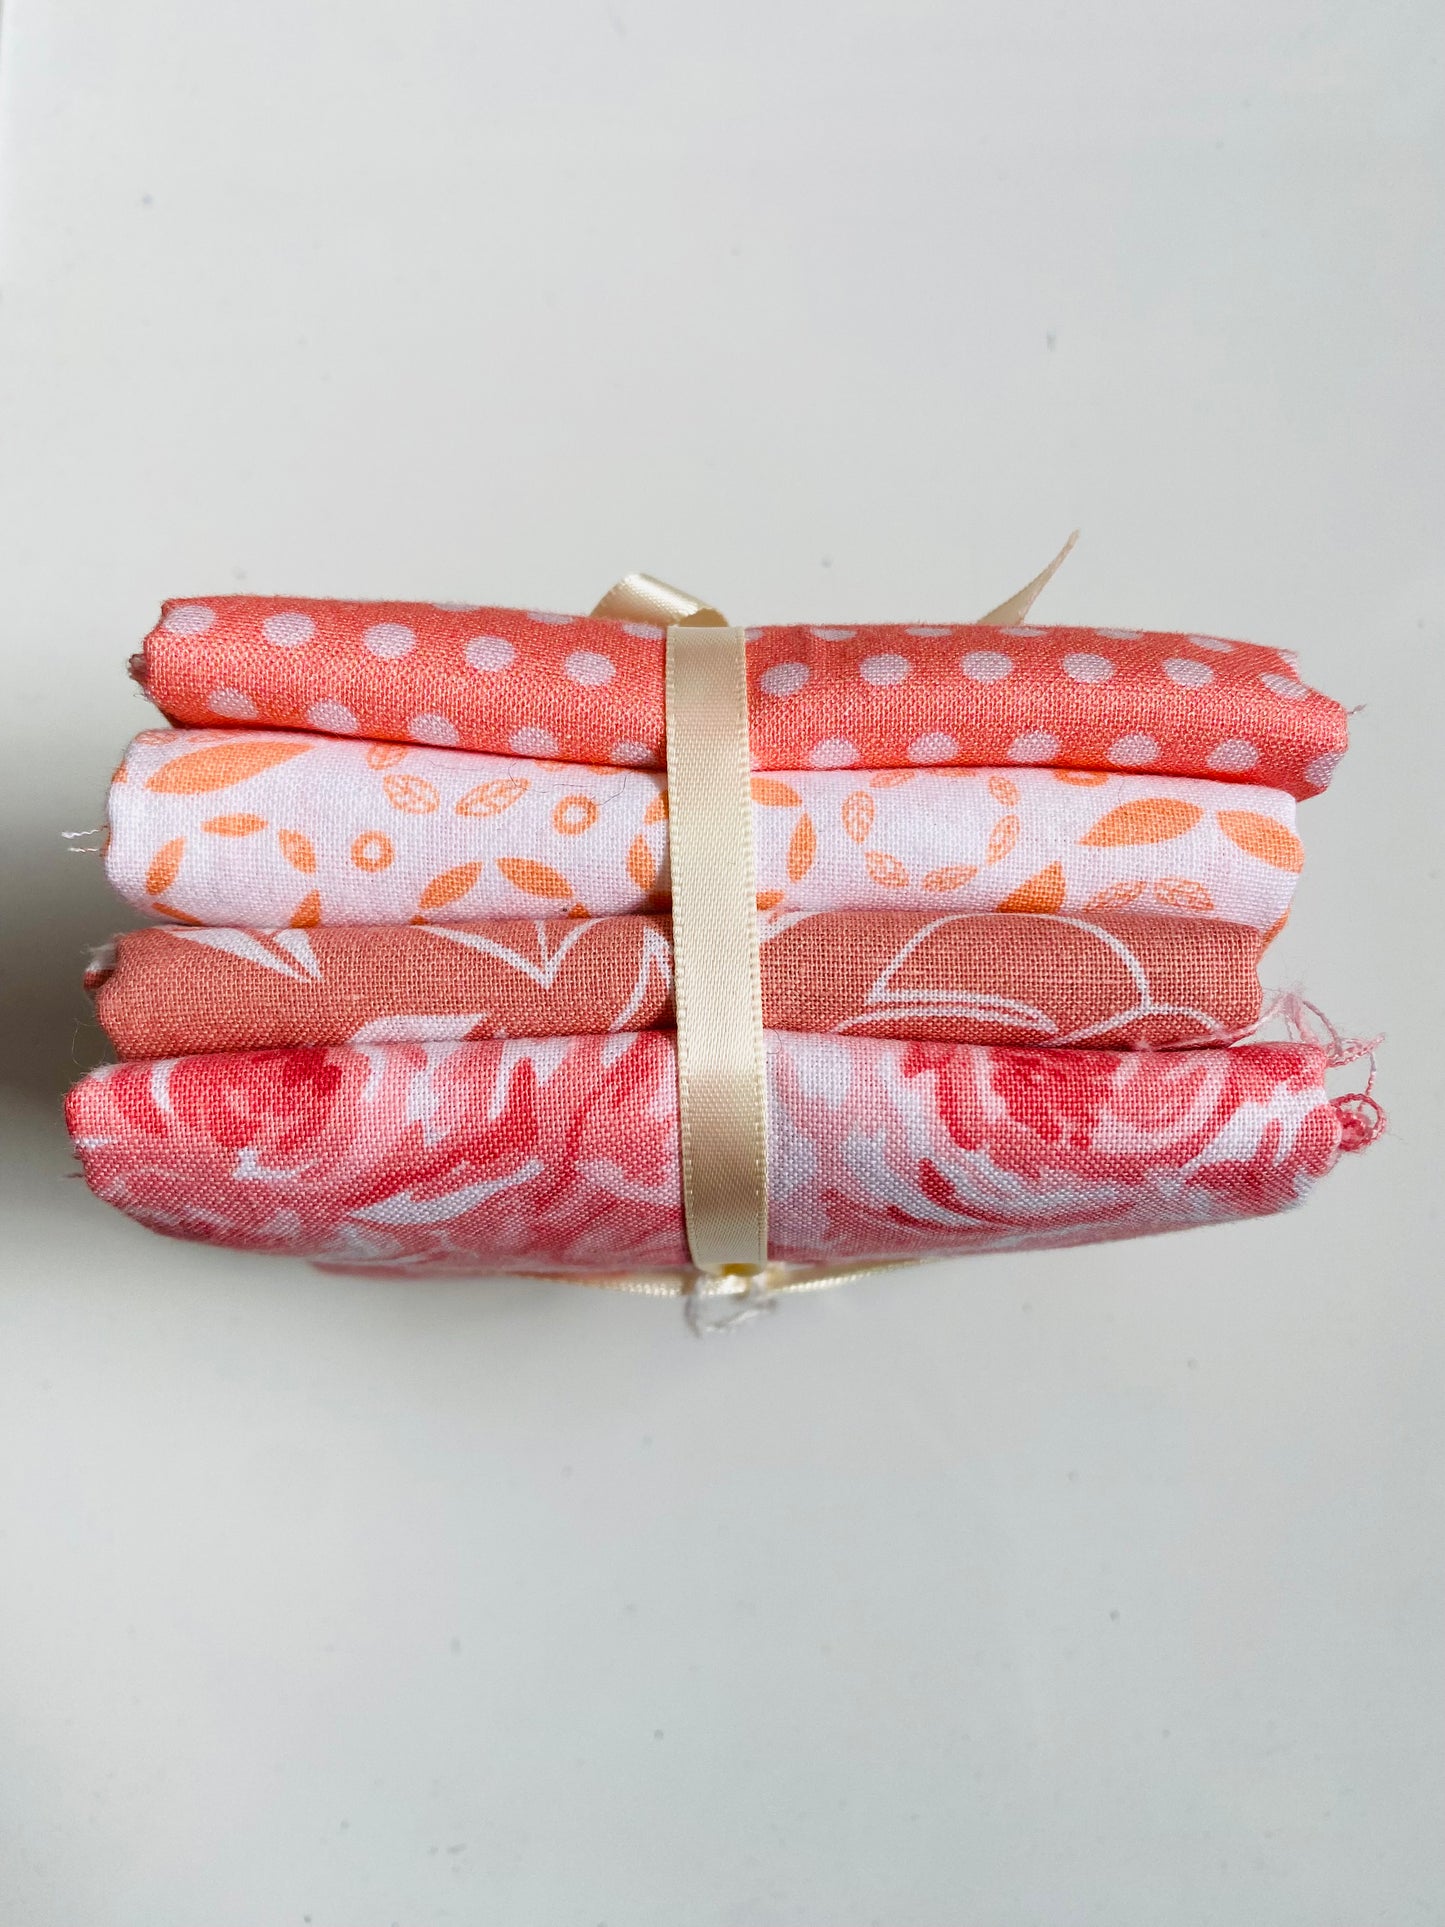 Fabric Fat Quarter Bundle - 'Pinks' - 100% Cotton